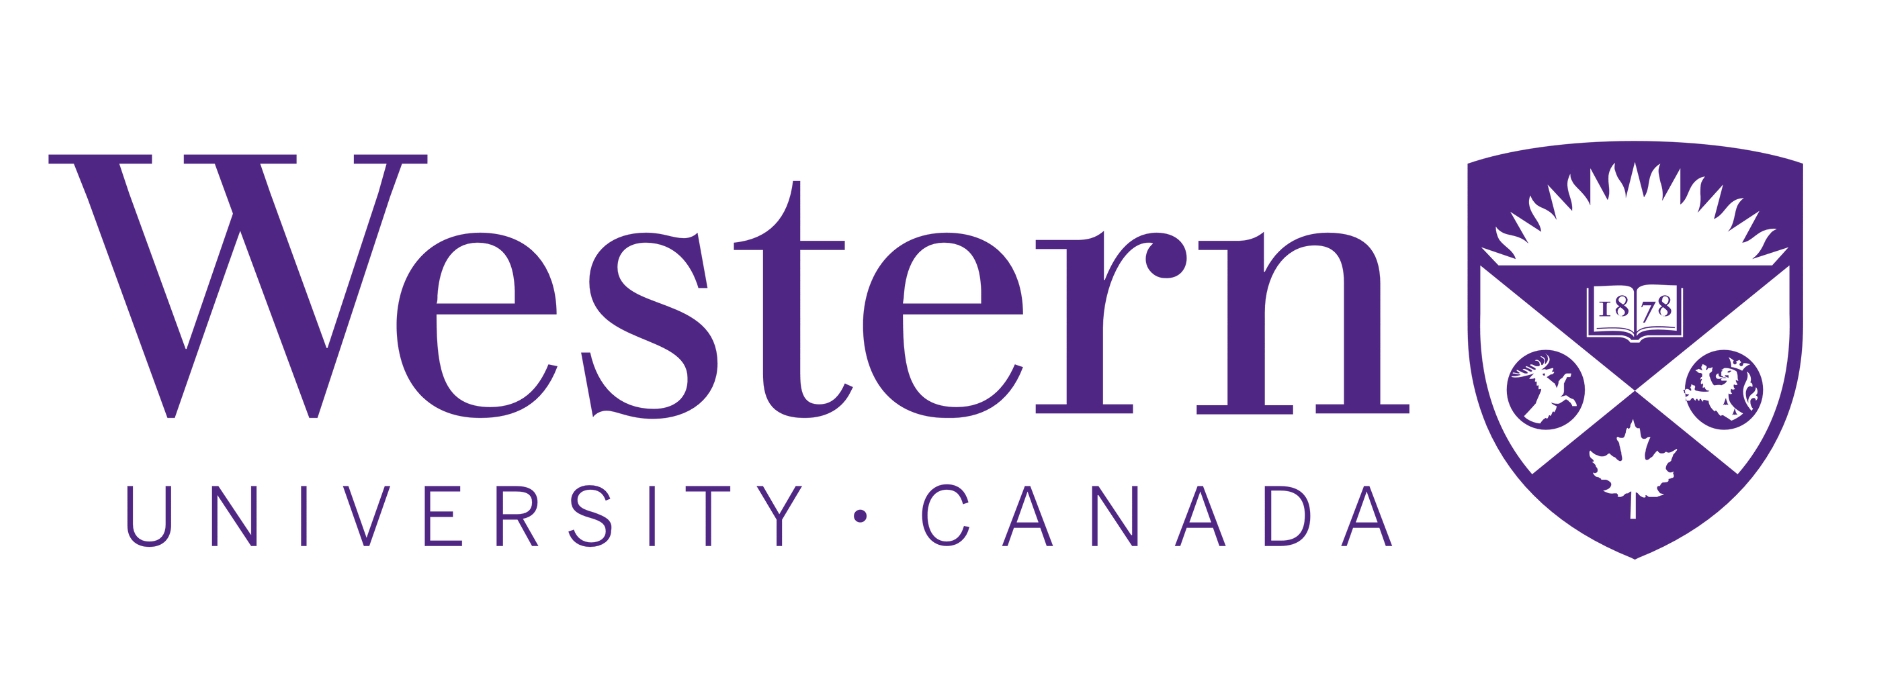 western university canada logo